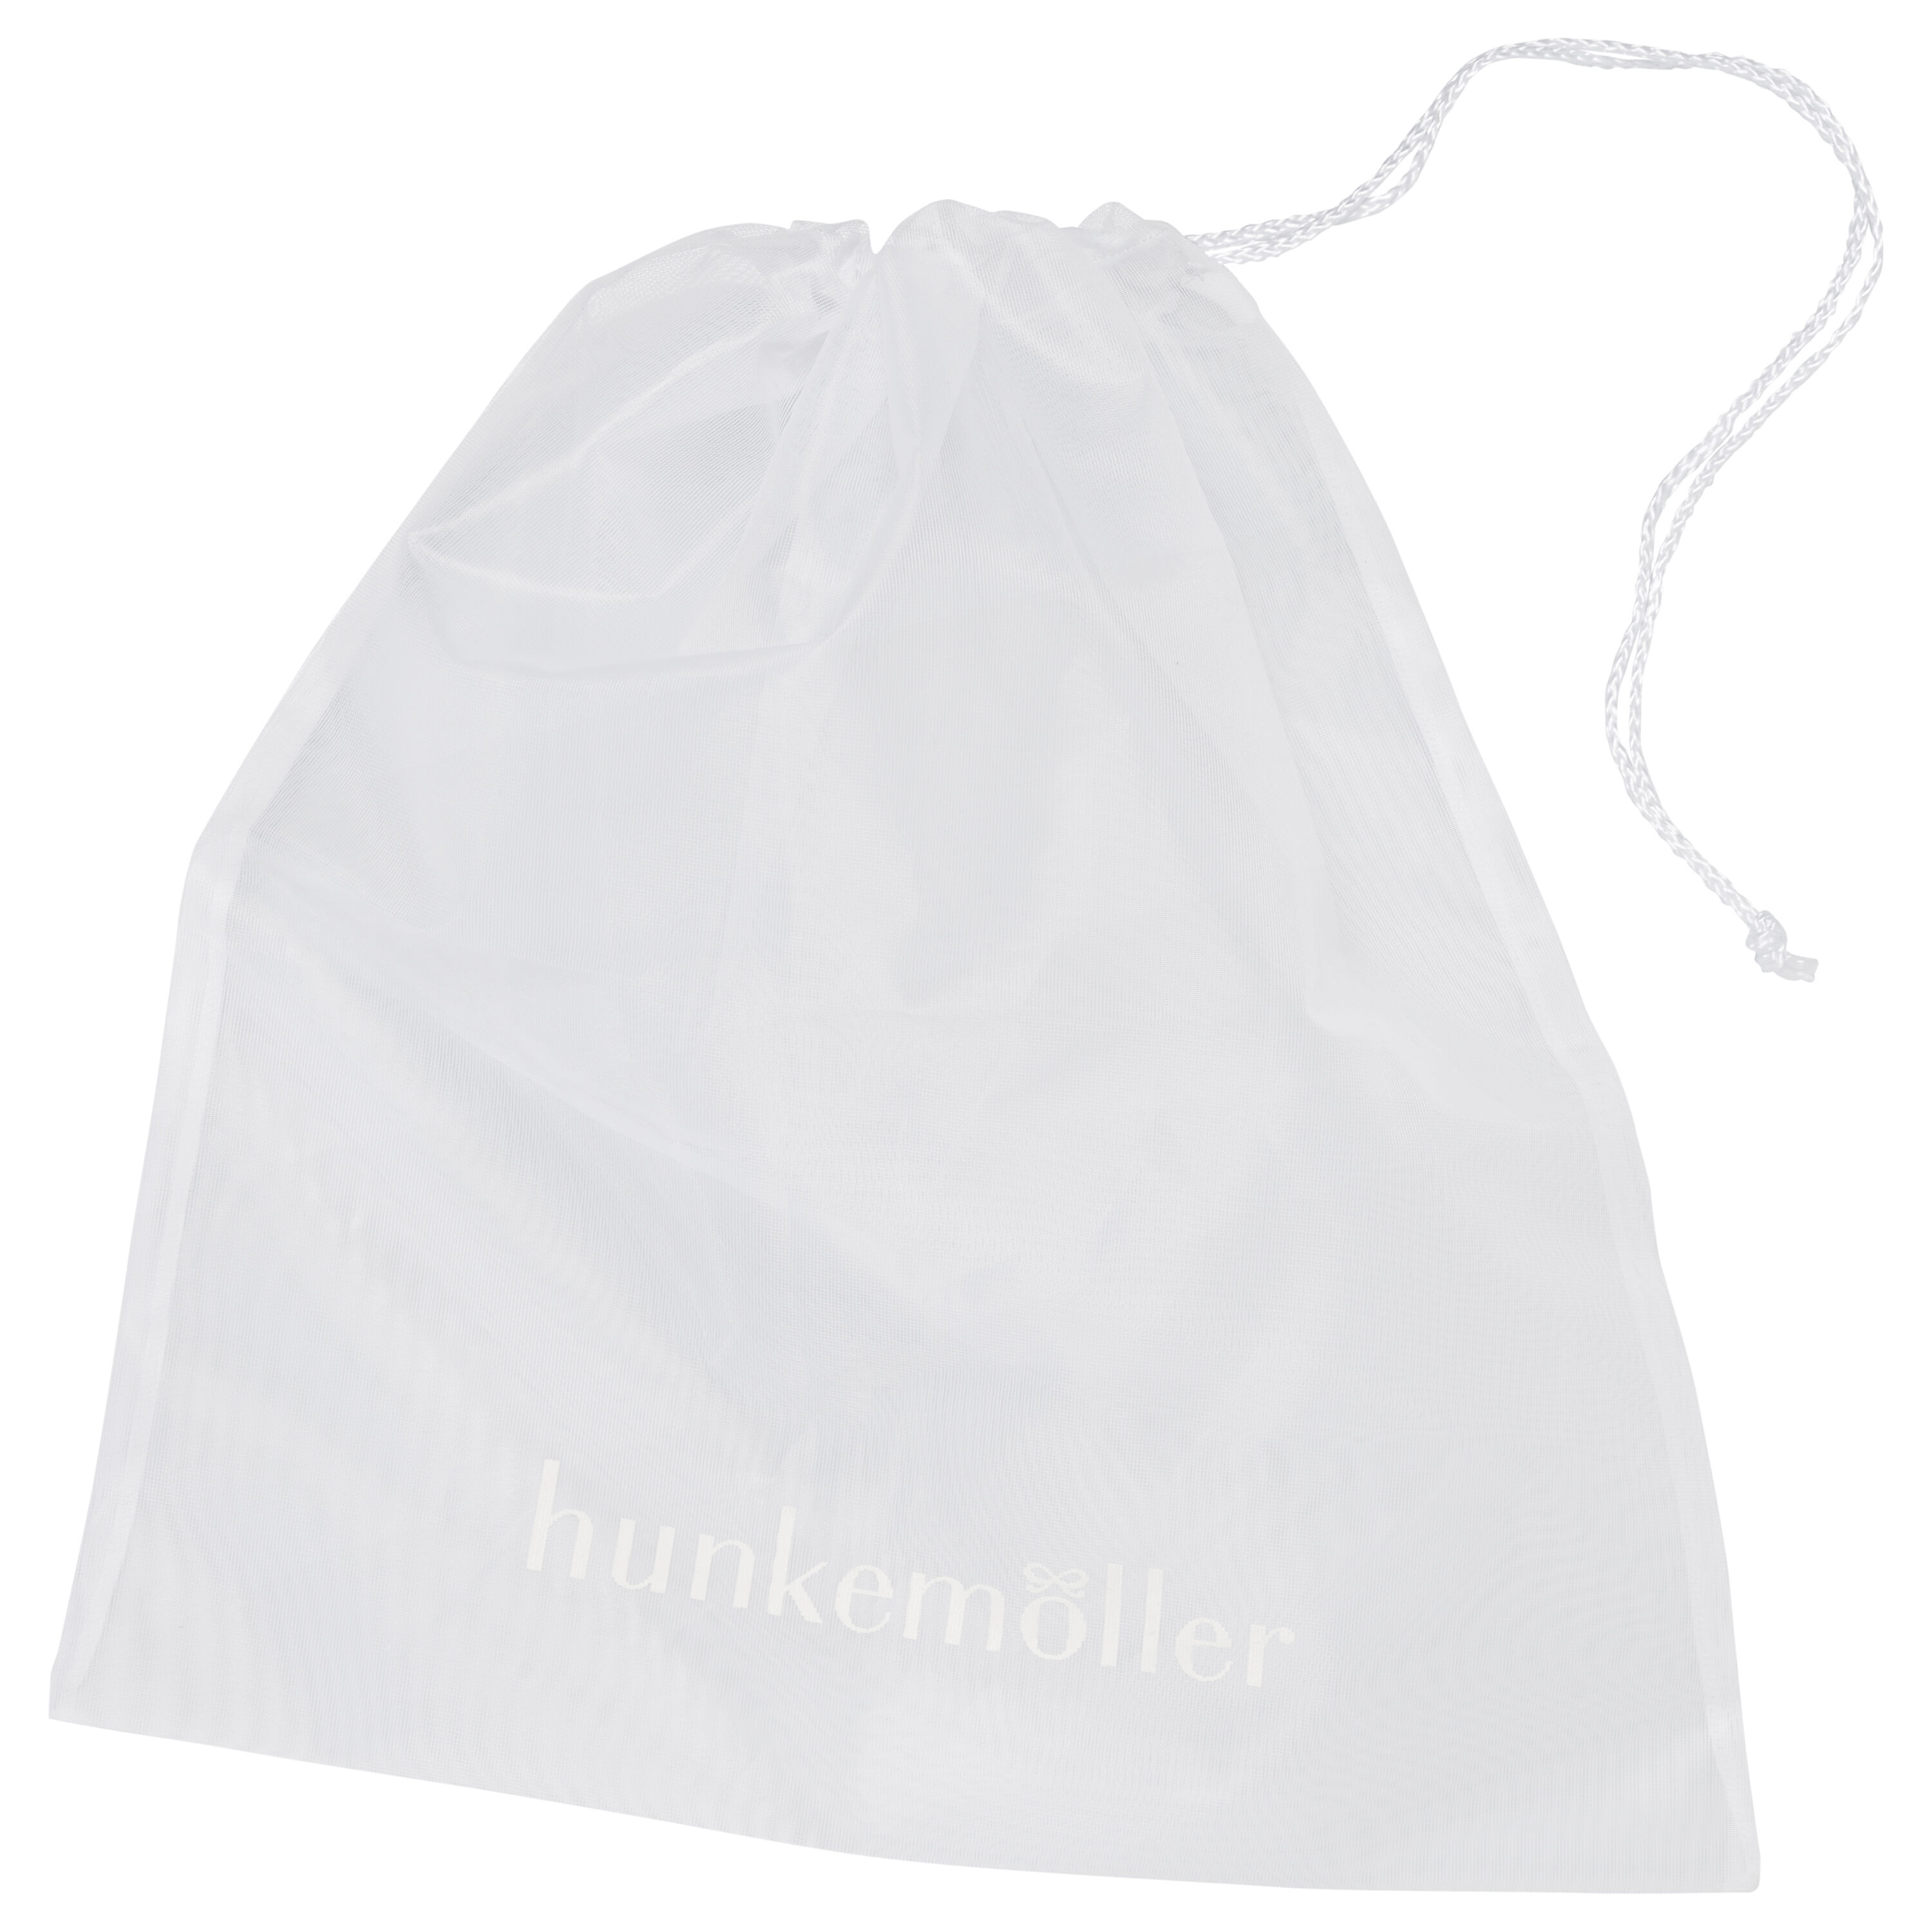 Linen Lingerie Bag - Embroidery Heaven